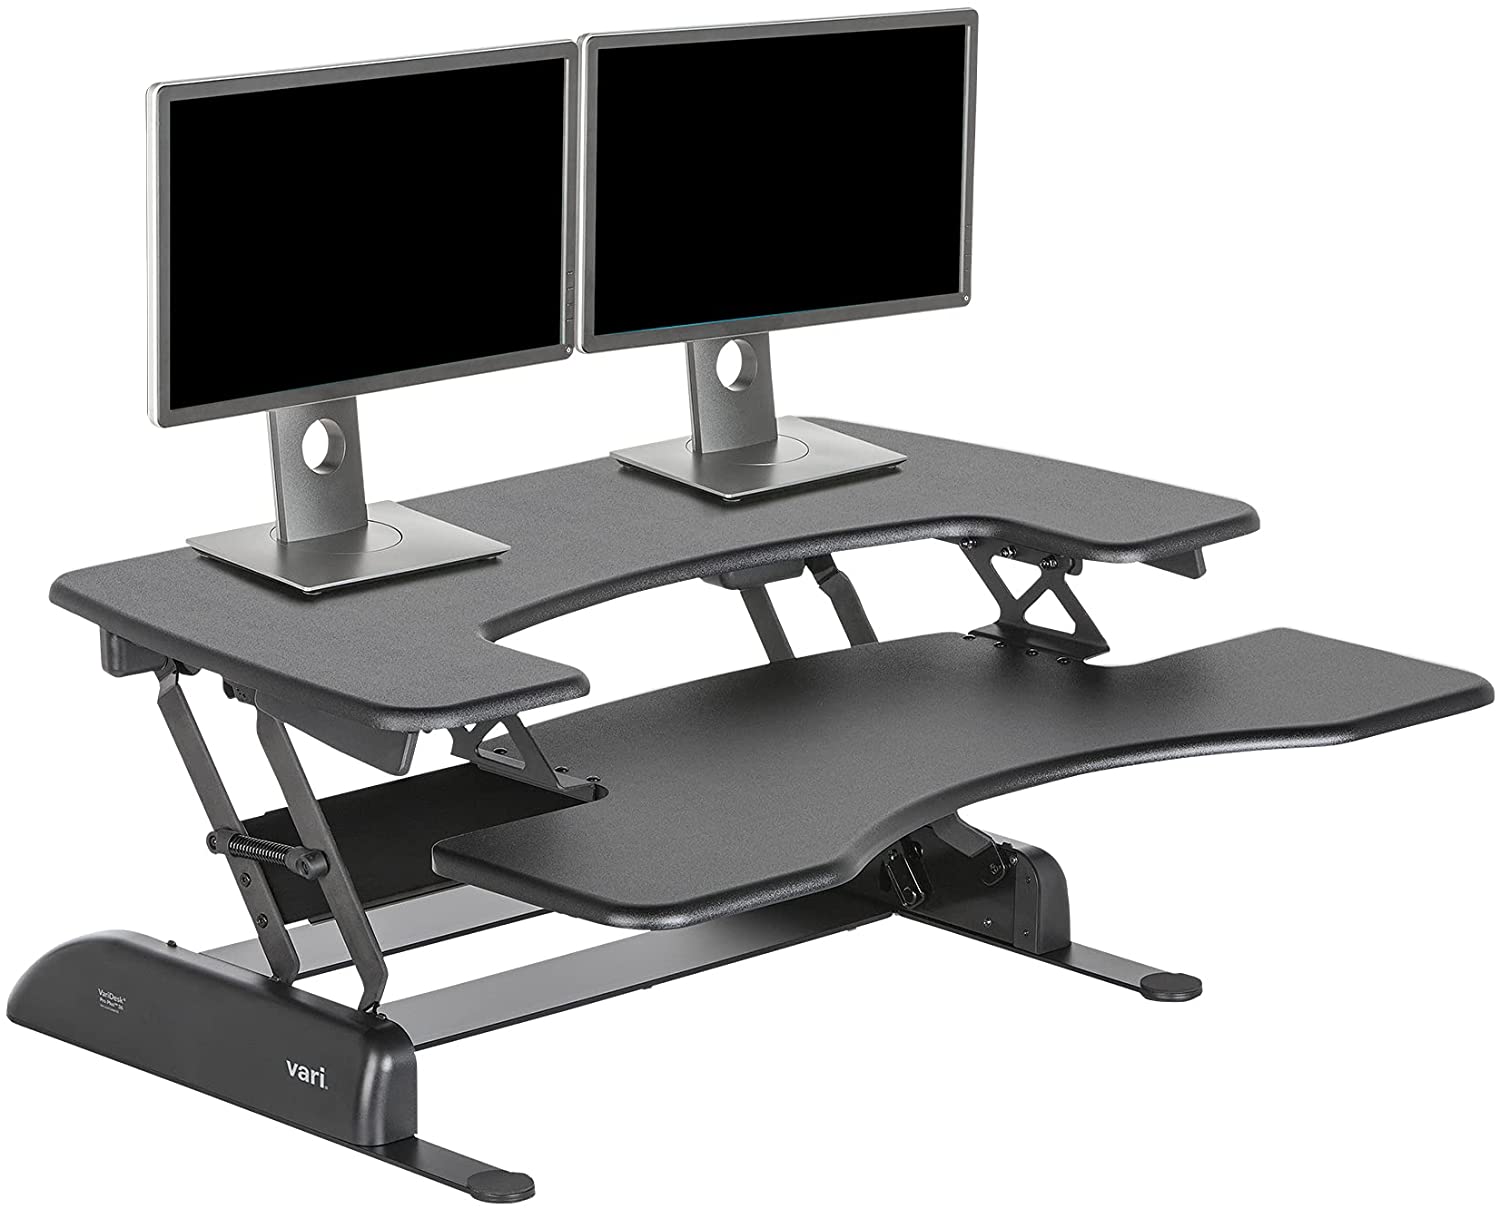 Desk Pro Plus 36 standing desk converter